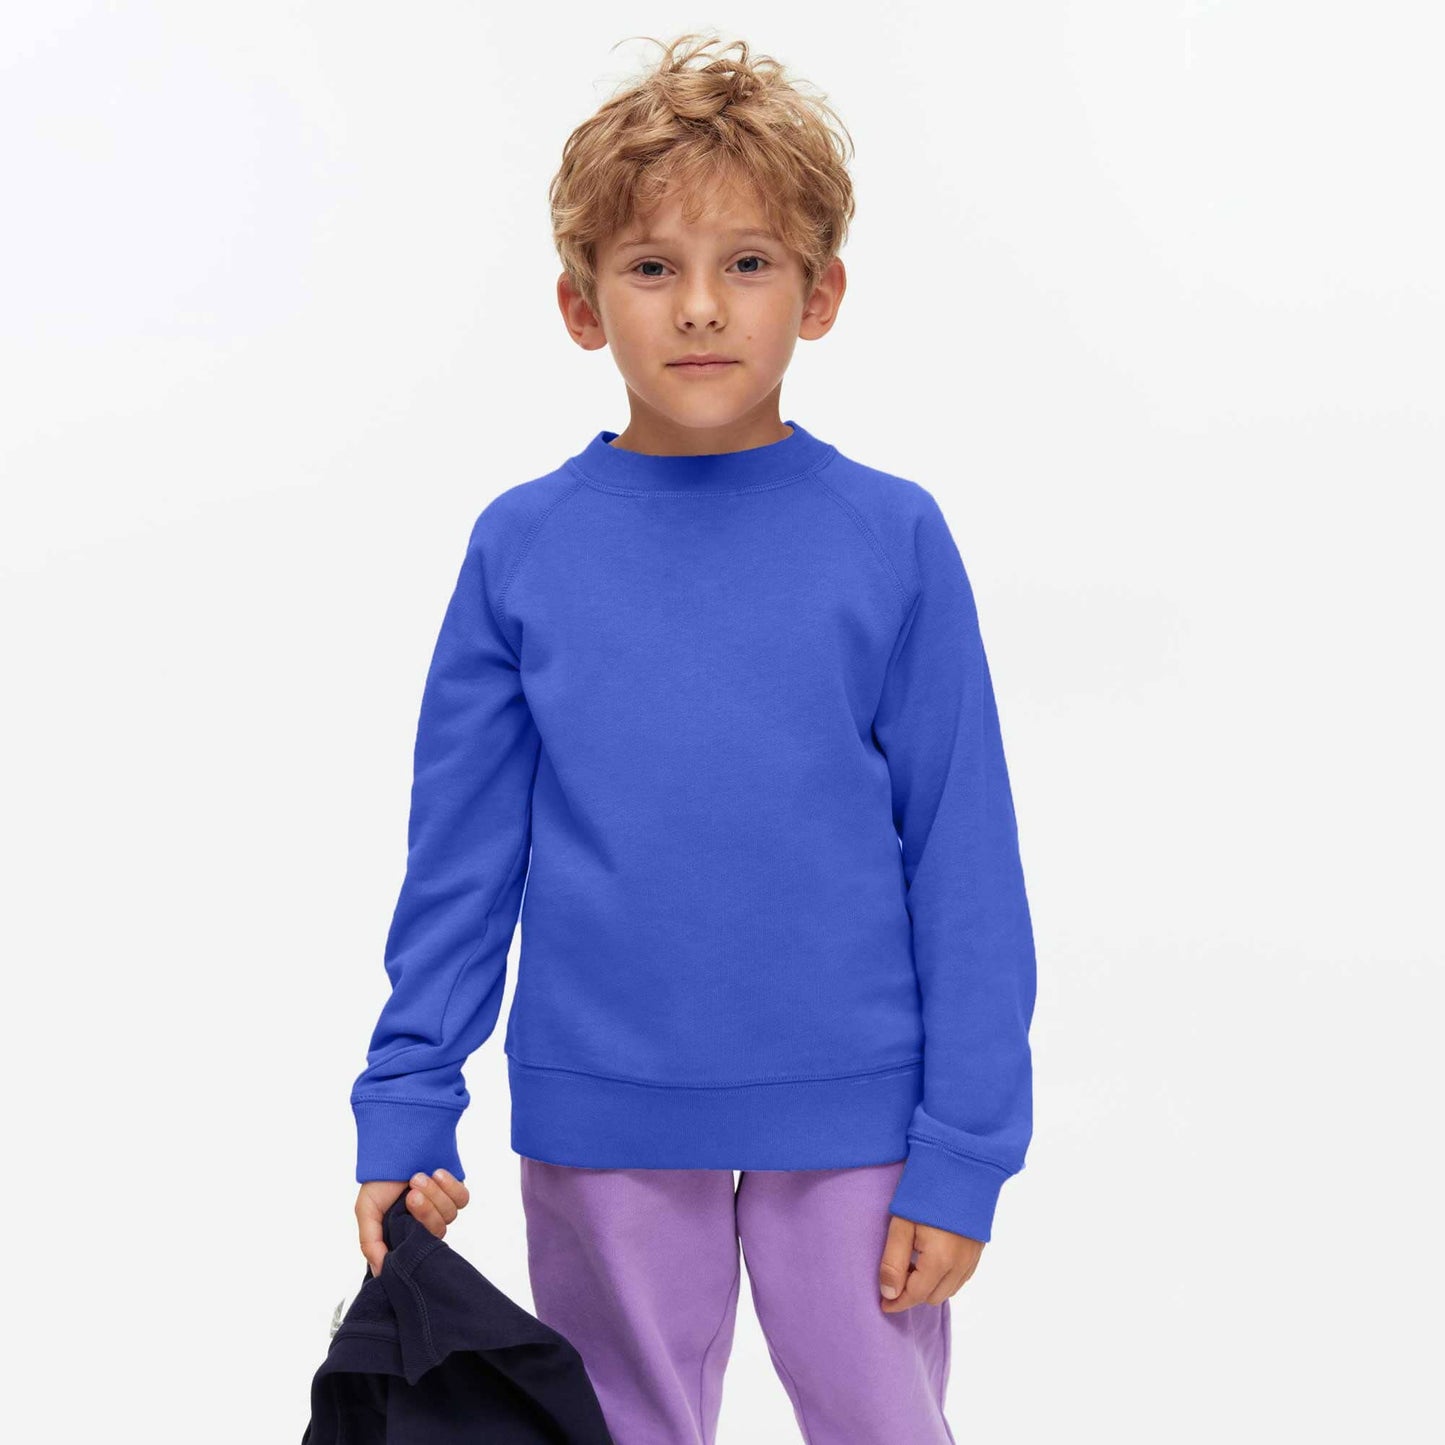 Sportex Kid's Solid Design Raglan Sleeve Fleece Sweat Shirt Kid's Sweat Shirt Minhas Garments Royal 3-4 Years 